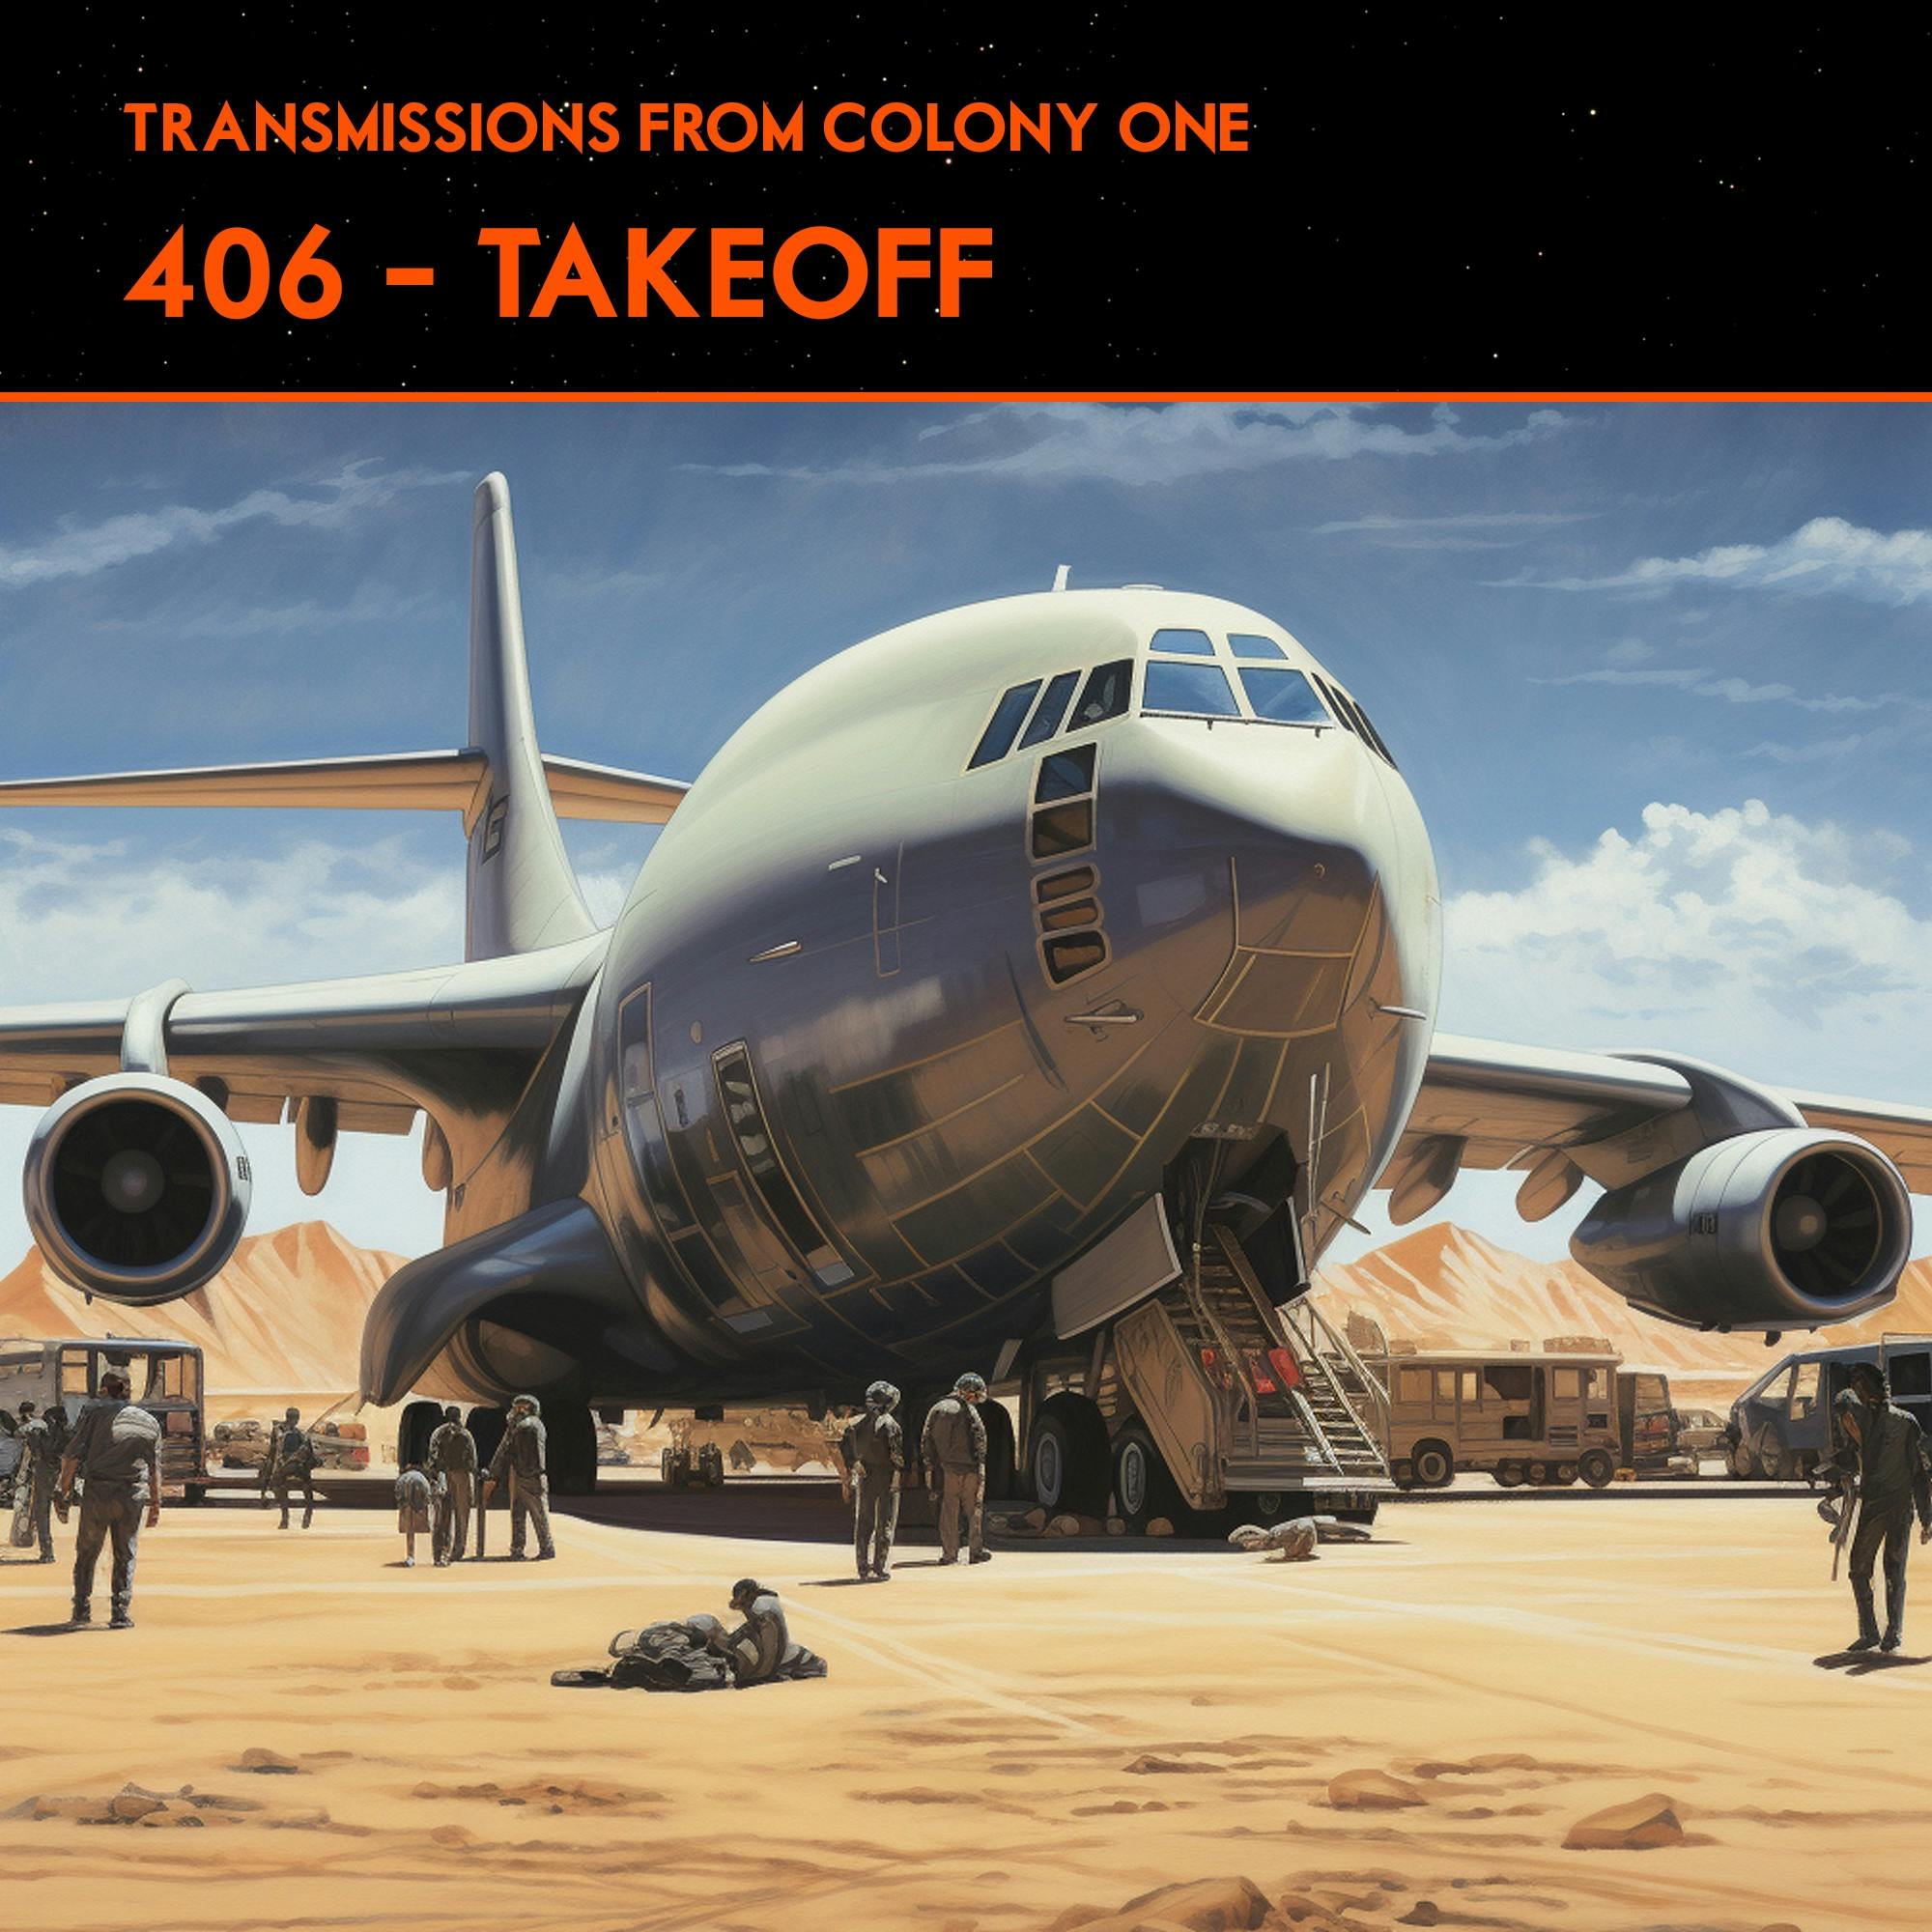 406 - Takeoff